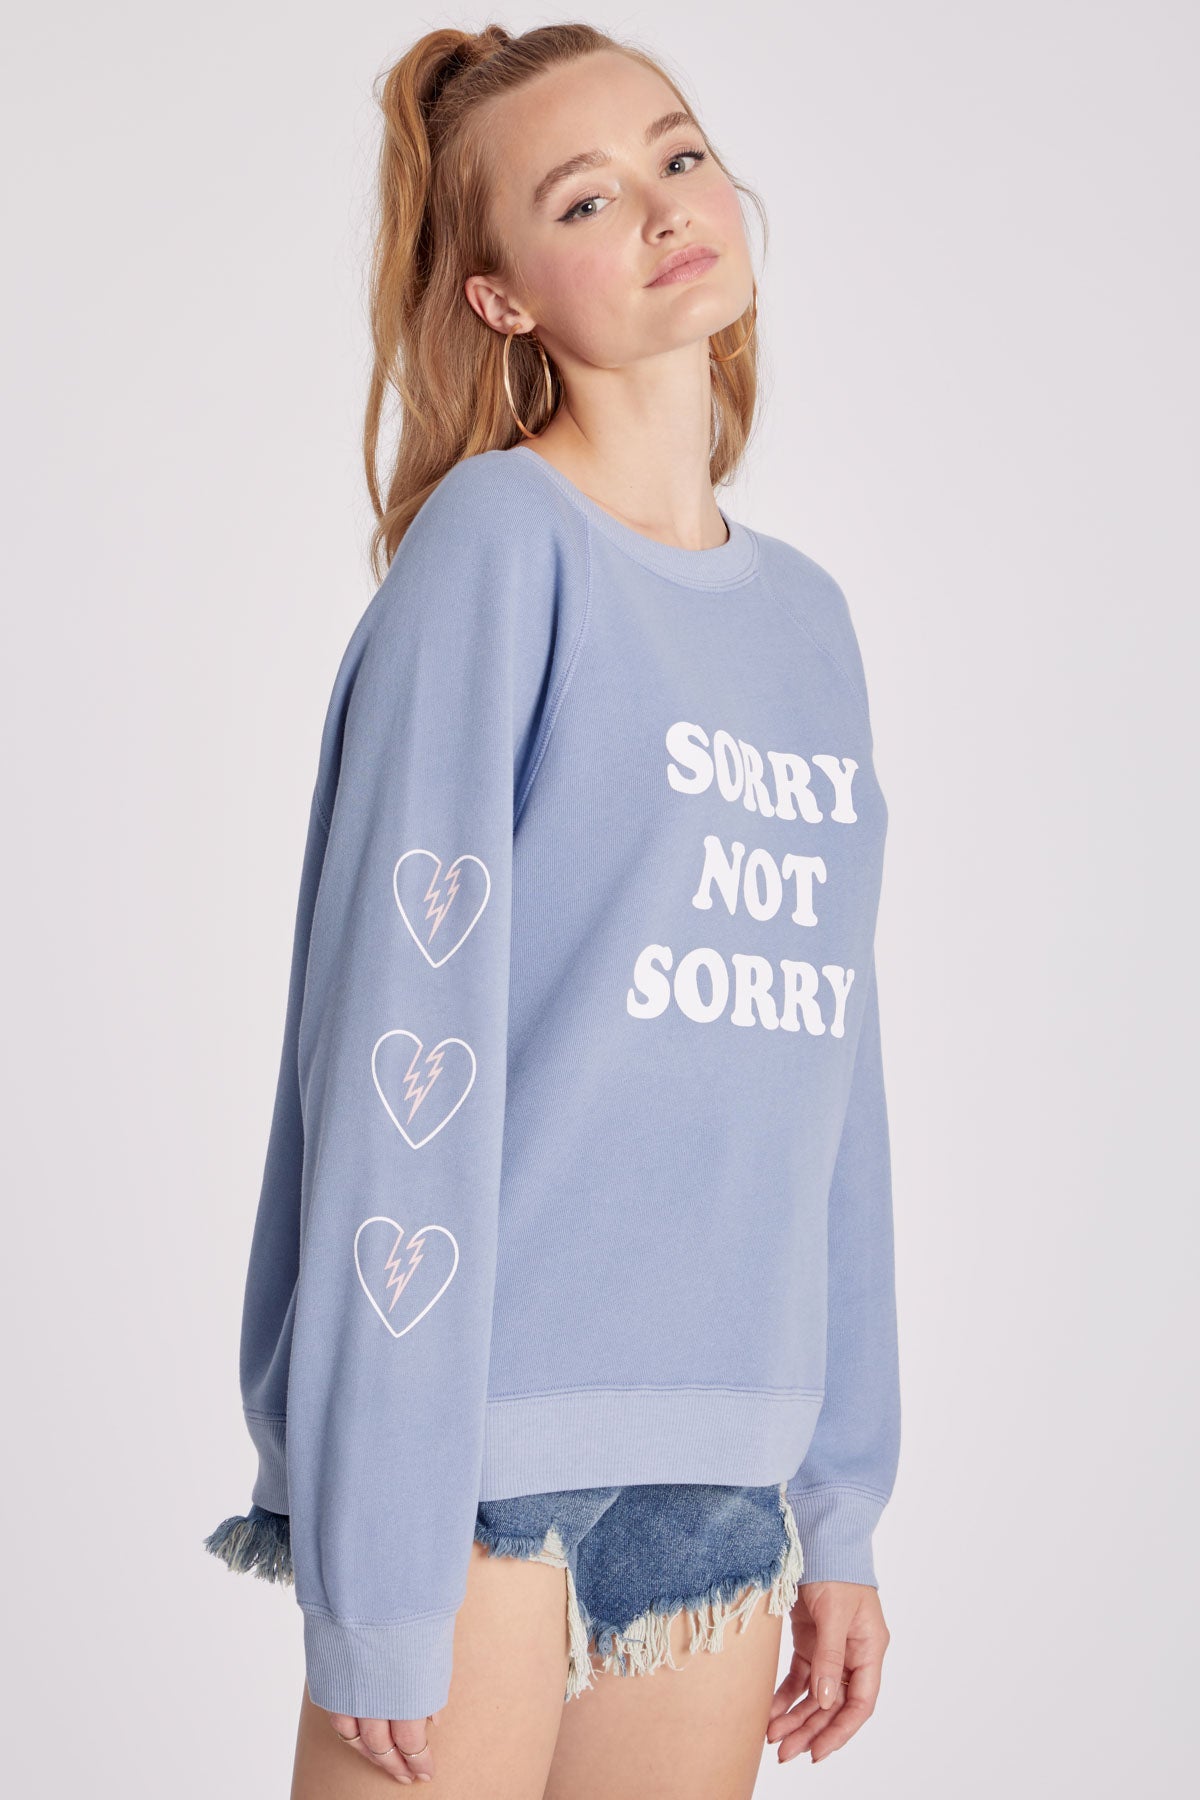 Not Sorry Sommers Sweatshirt | Infinity